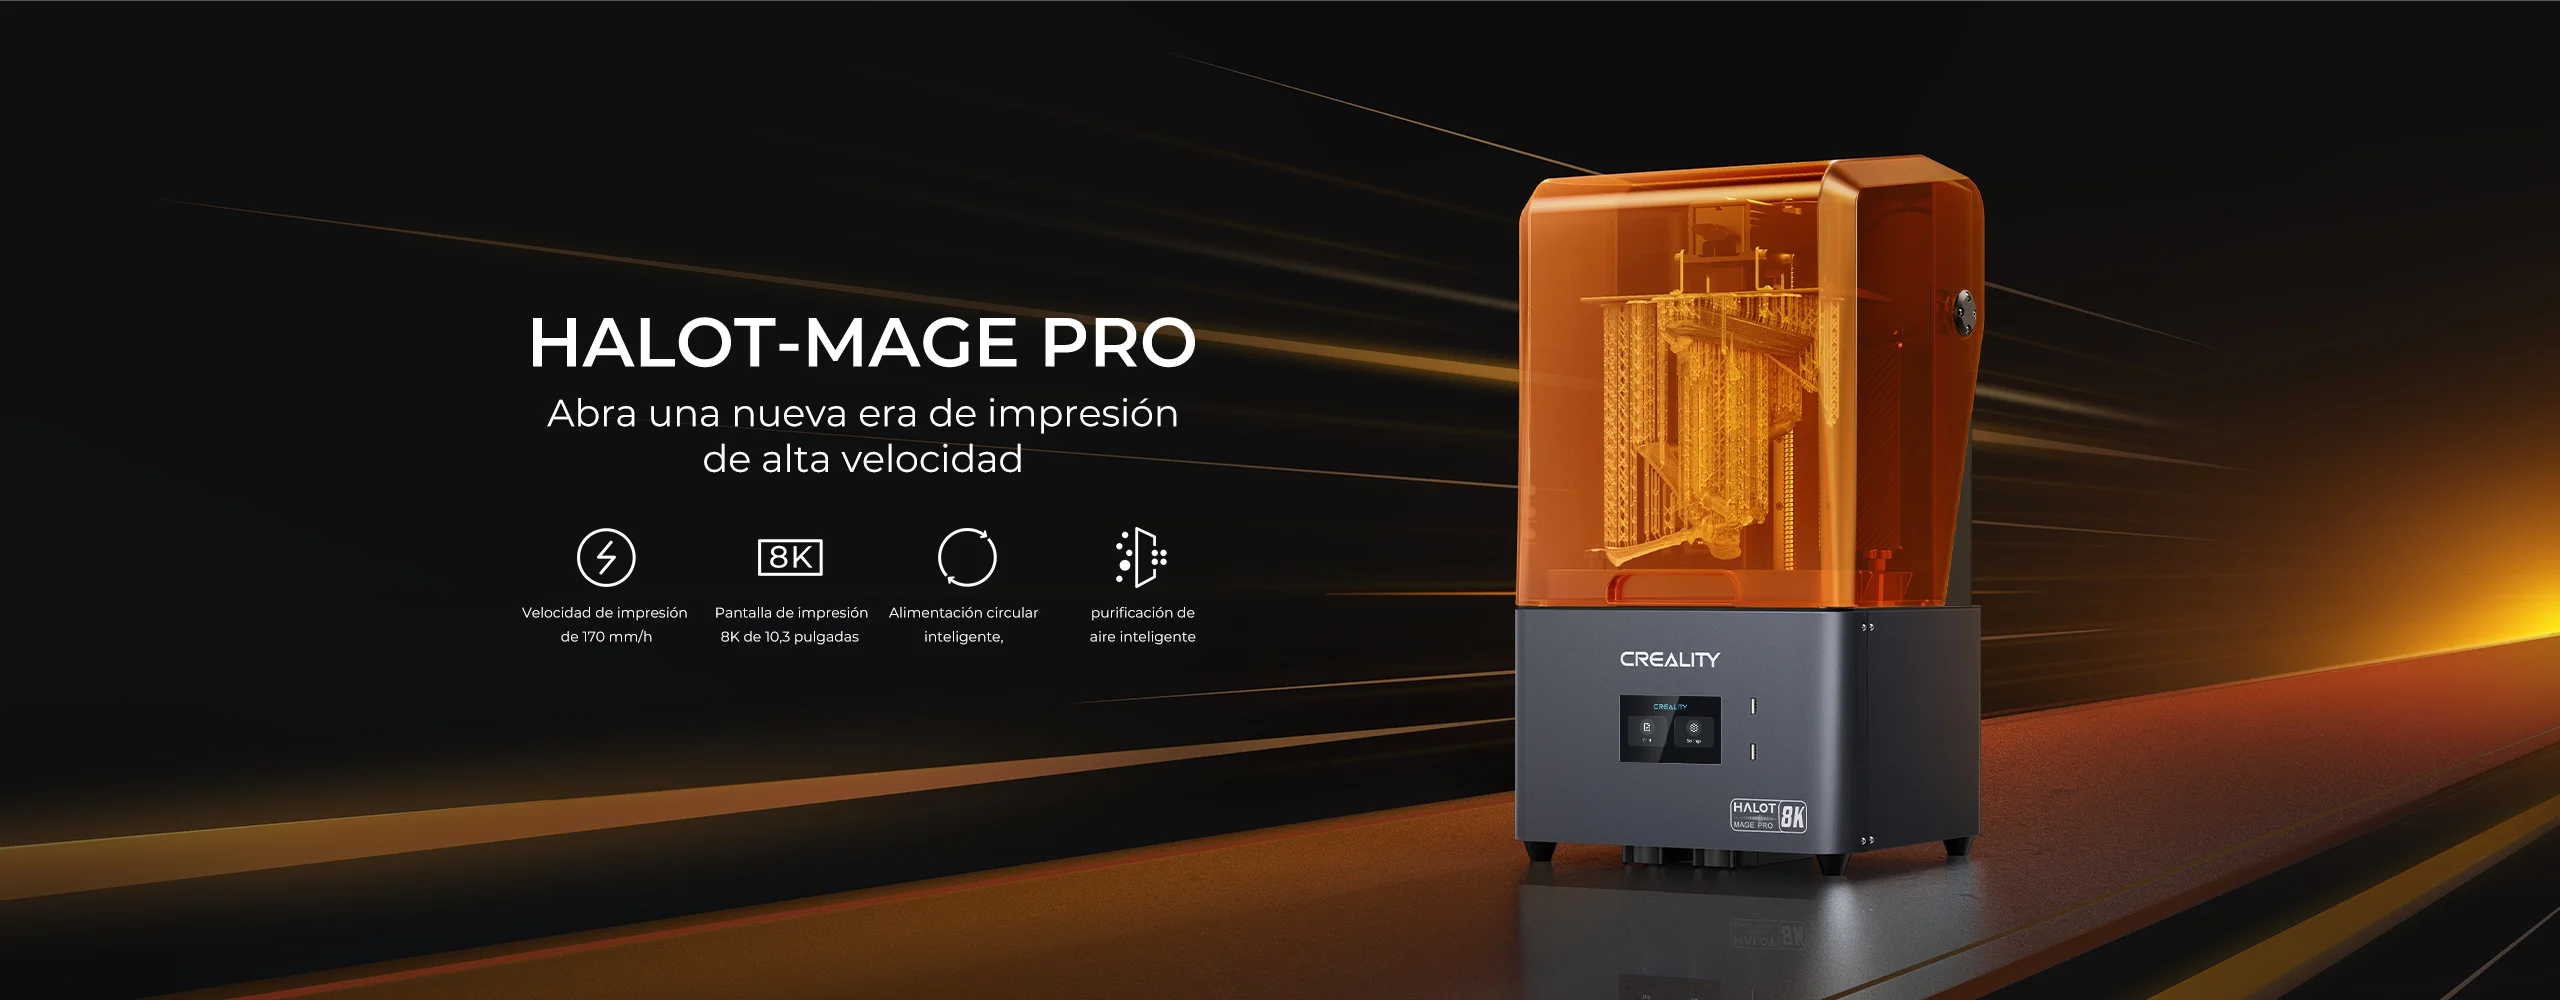 Creality Halot Mage Pro 8K 3D Printer